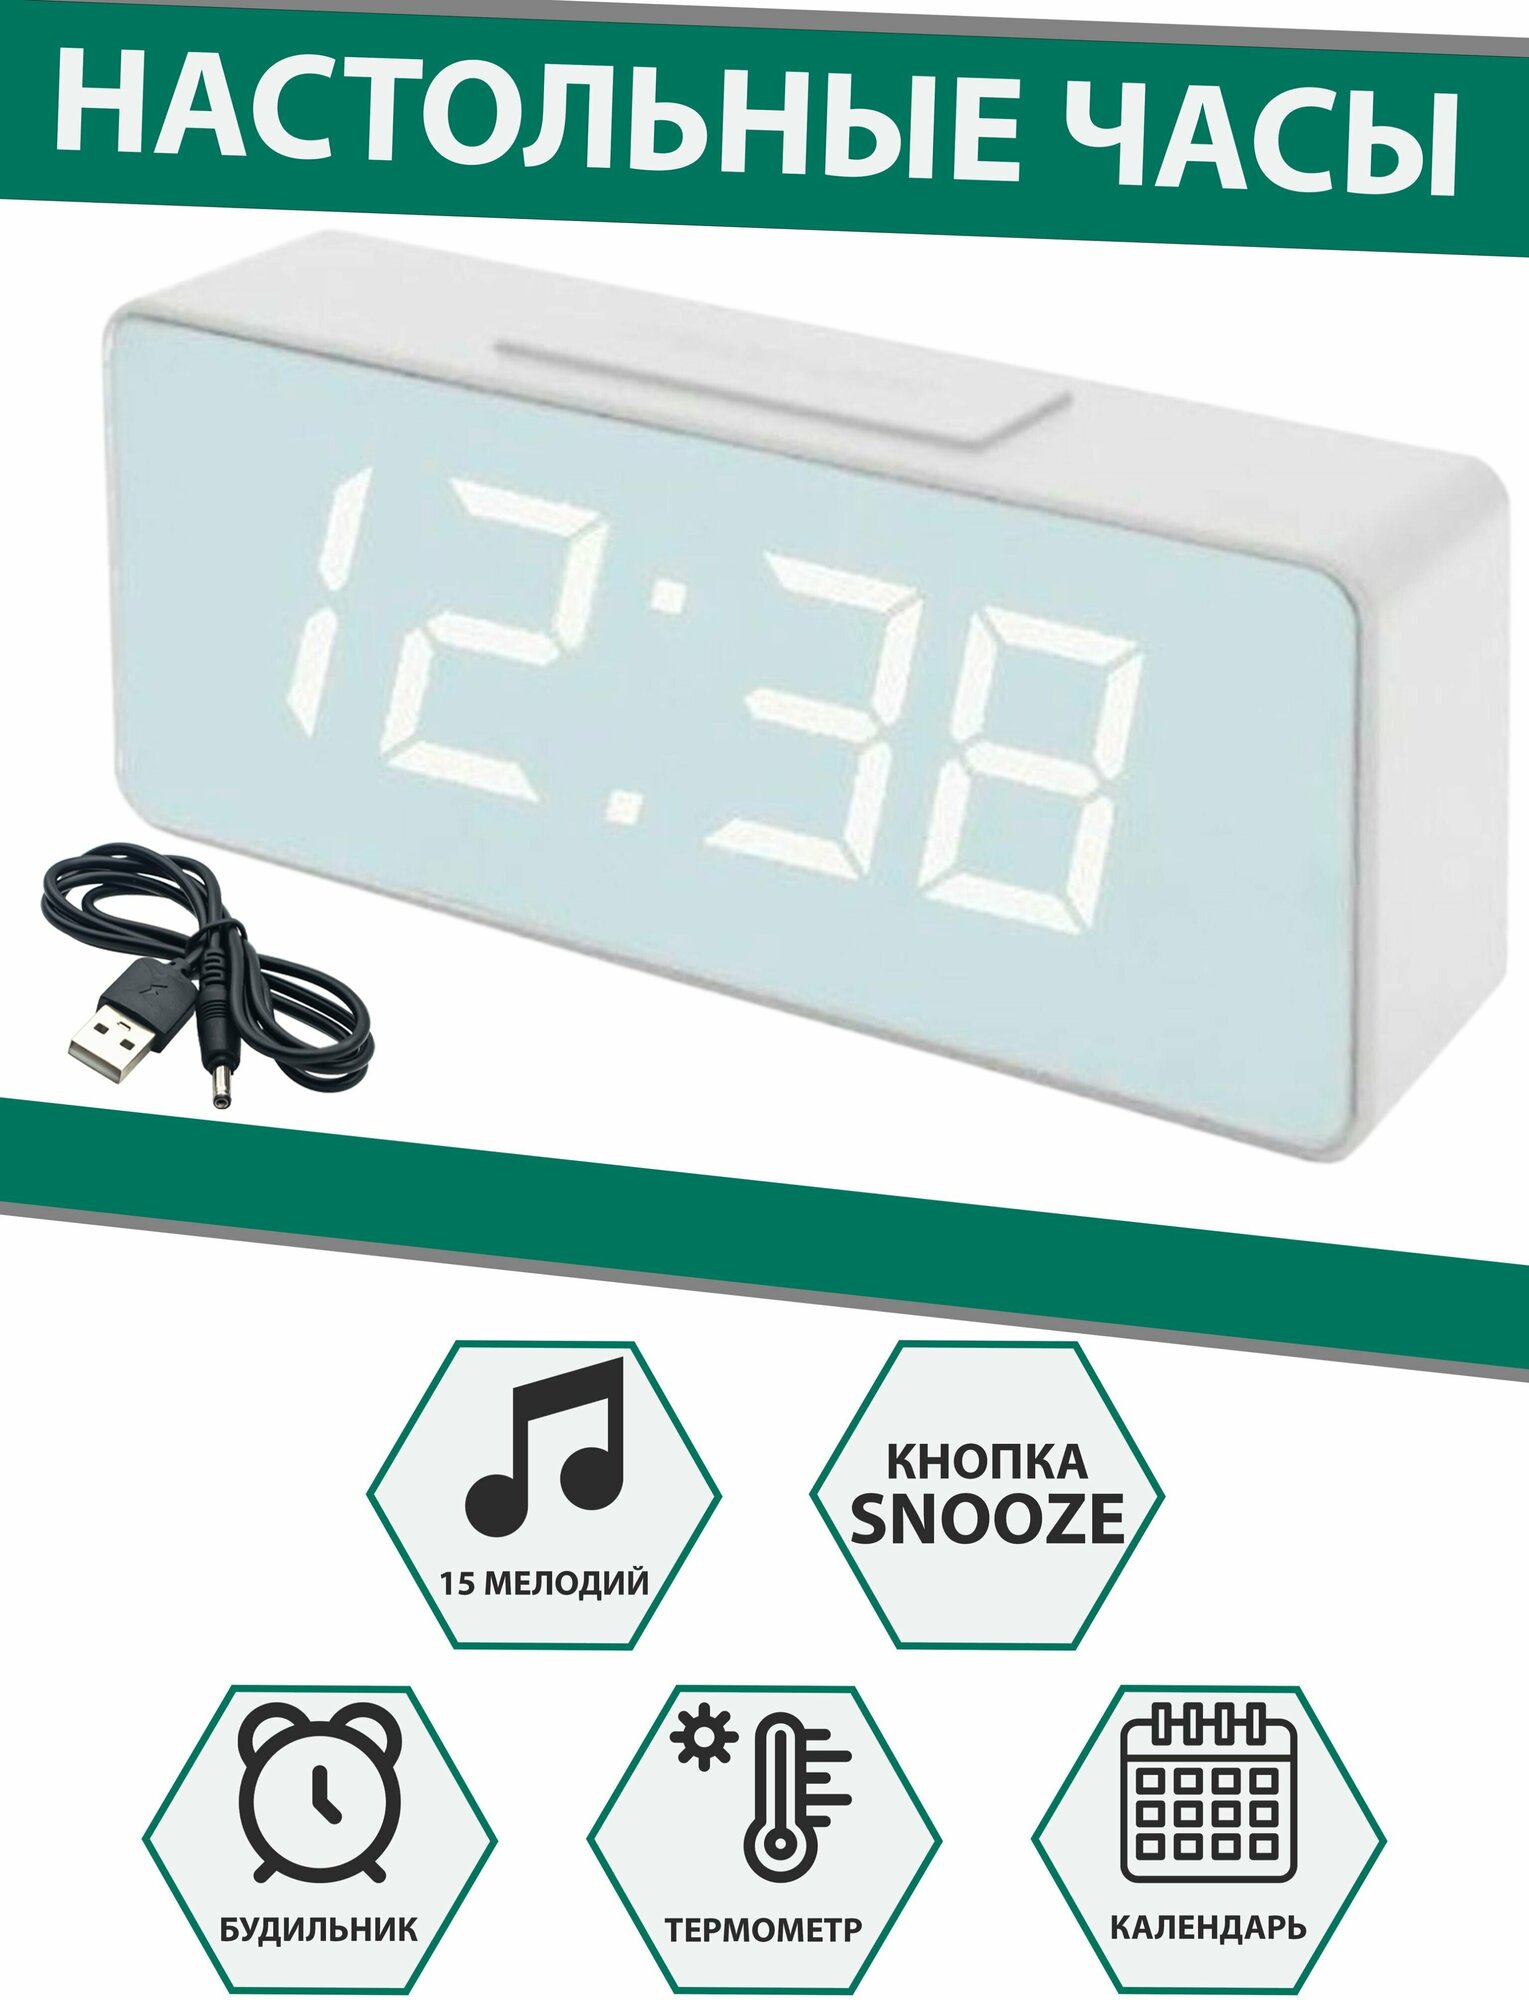 Настольные электронные часы - будильник VST886Y-белый